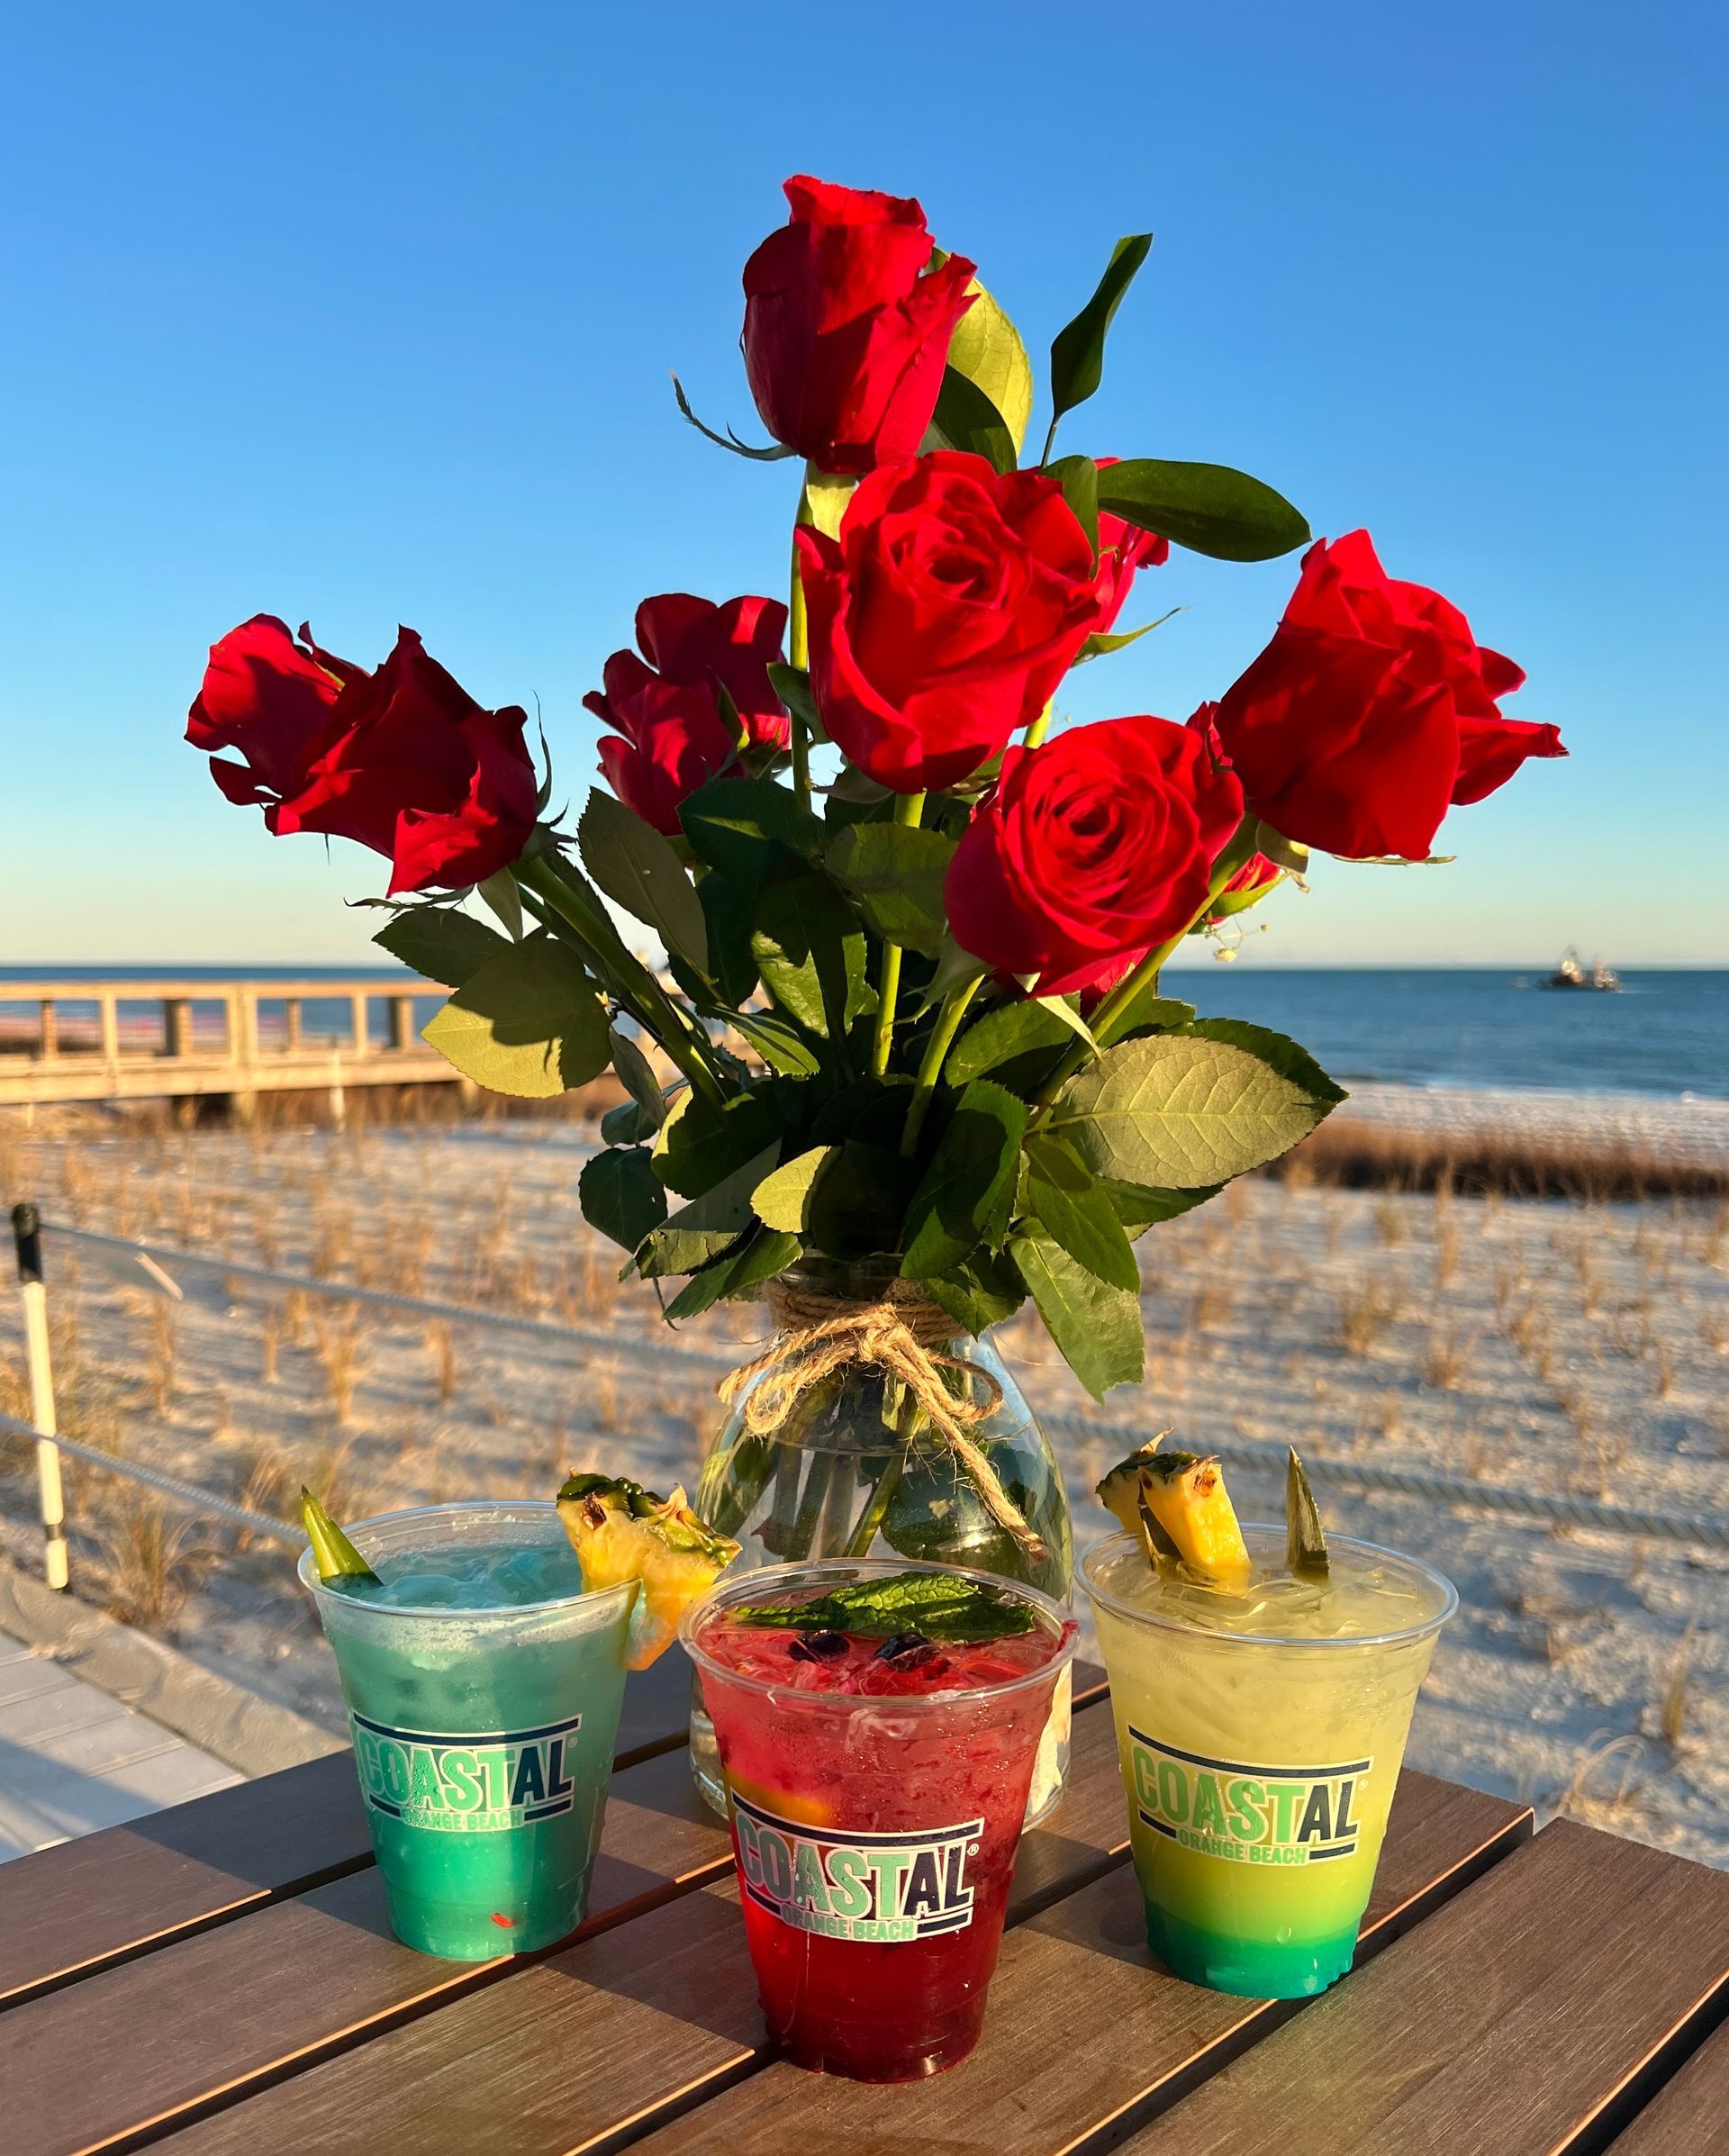 romantic roses on the beach